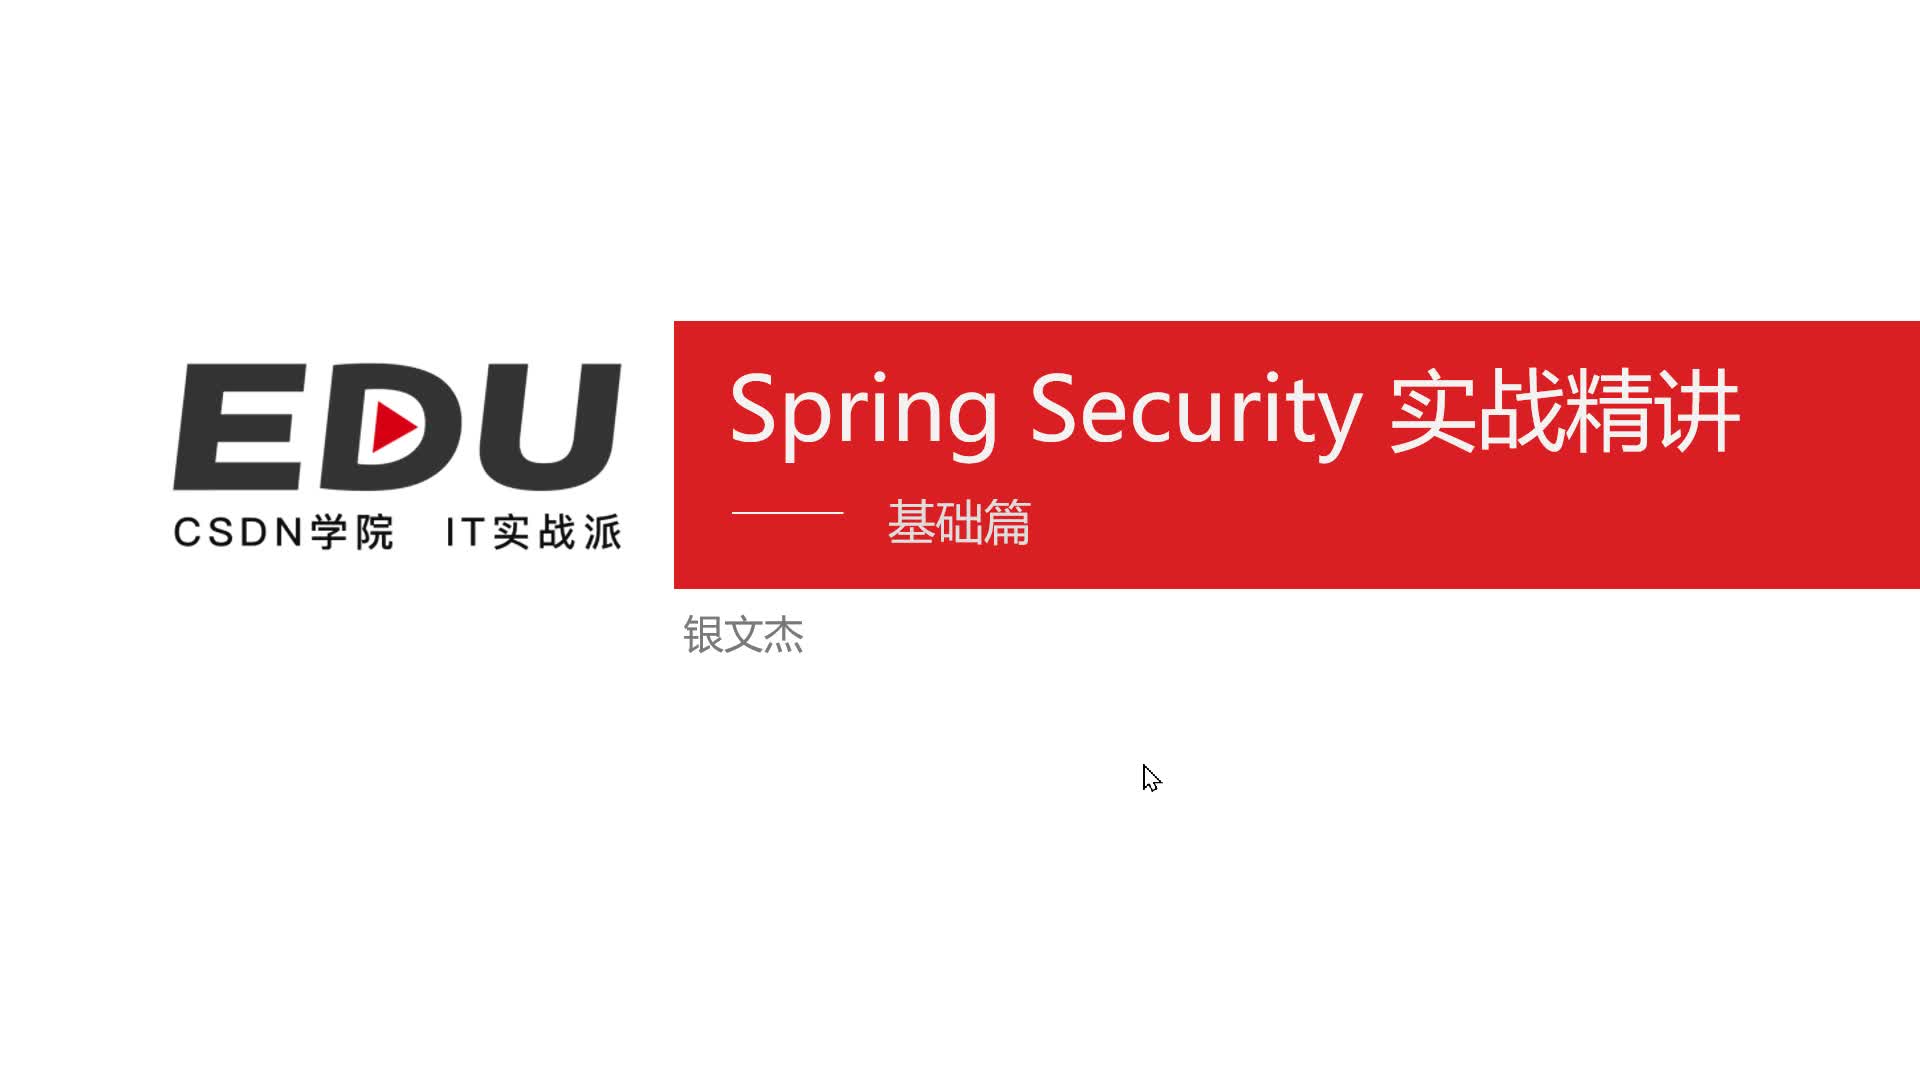 Spring Security 实战精讲——基础篇